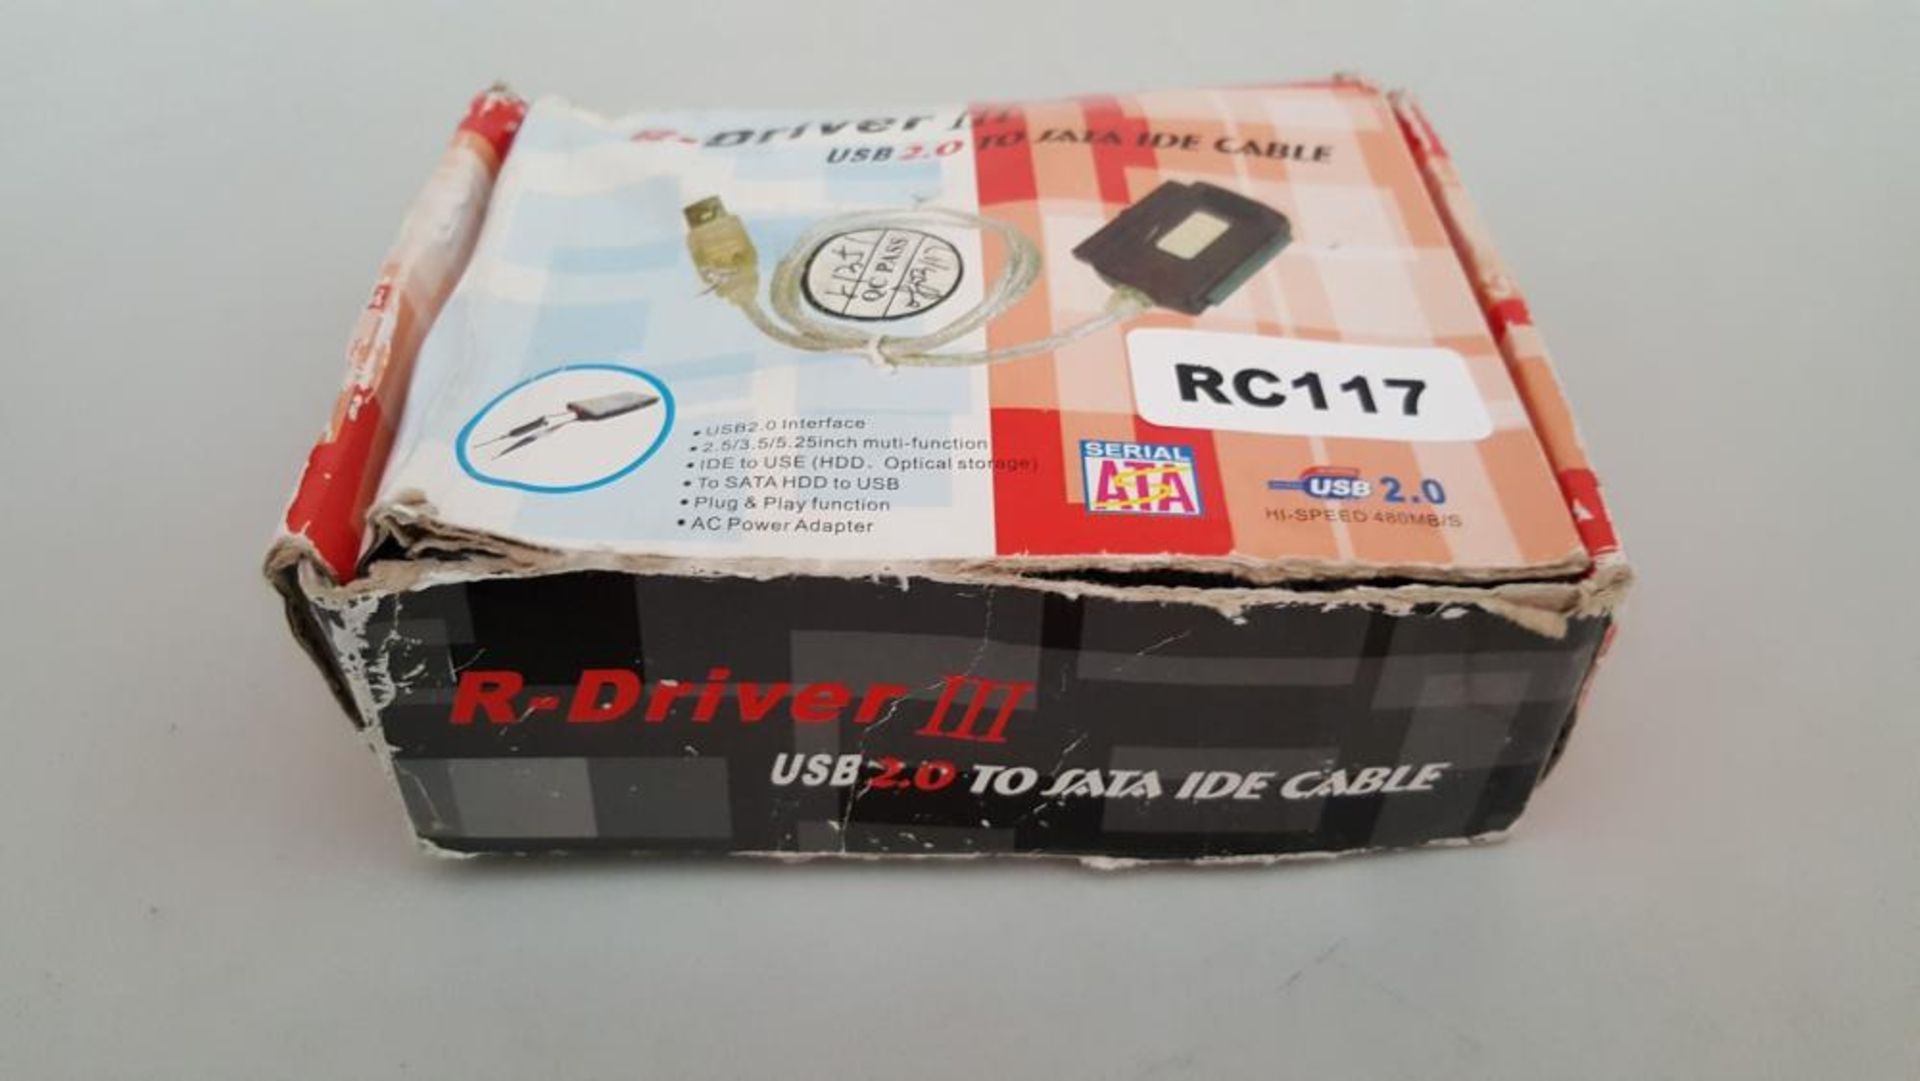 1 x R-Driver III USB 2.0 to SATA IDE Cable - Ref RC117 - CL011 - Location: Altrincham WA14 A - Image 2 of 4